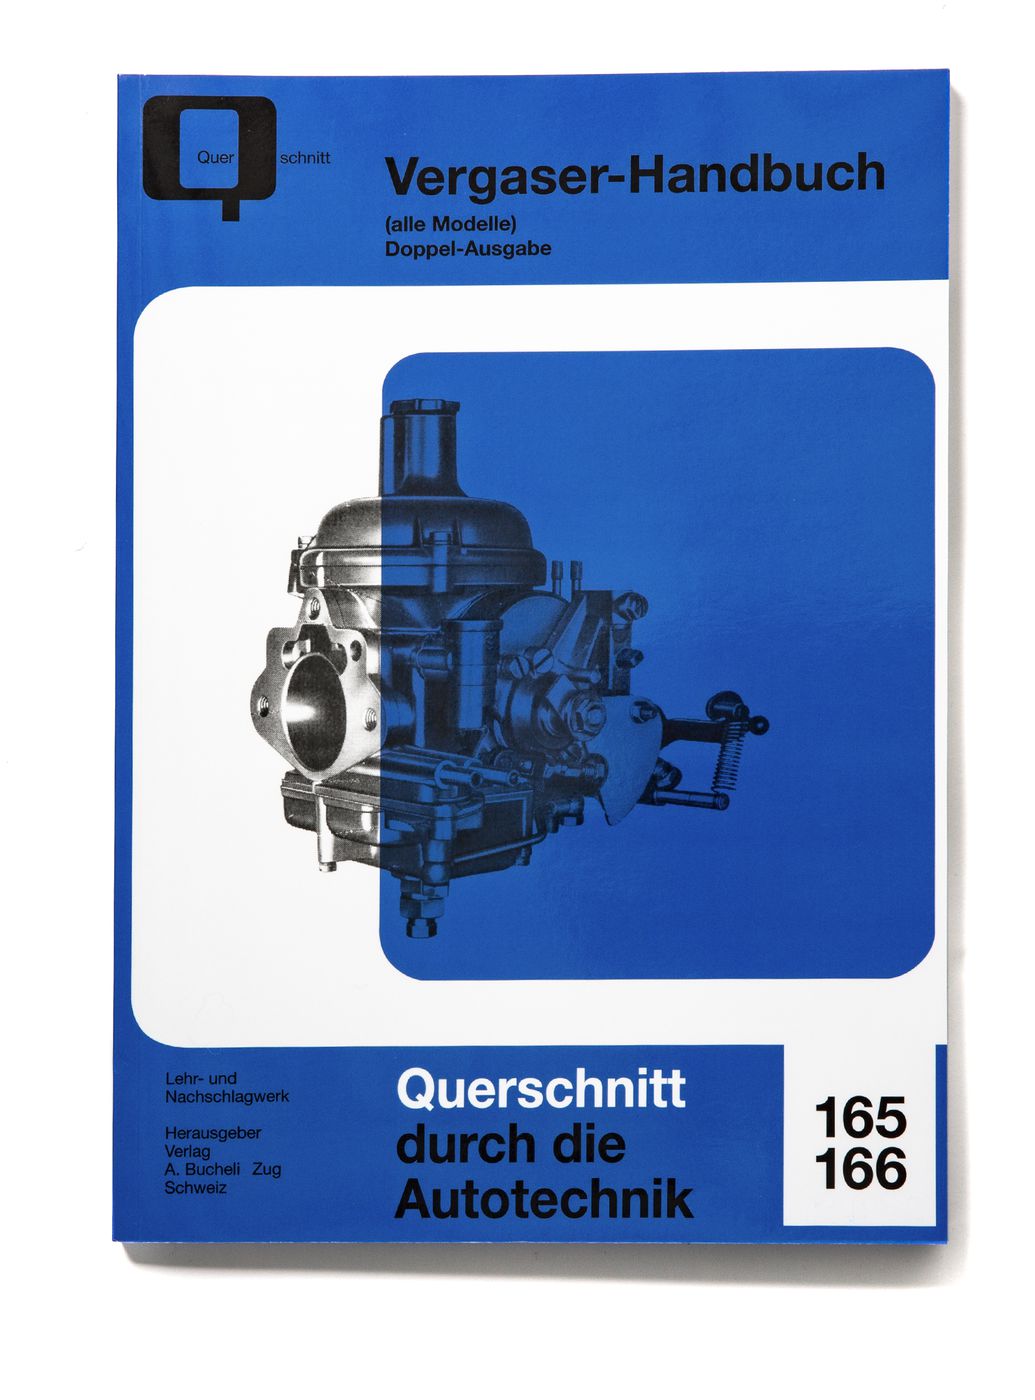 Vergaser-Handbuch
Carburettor manual
Manuel du carburateurs